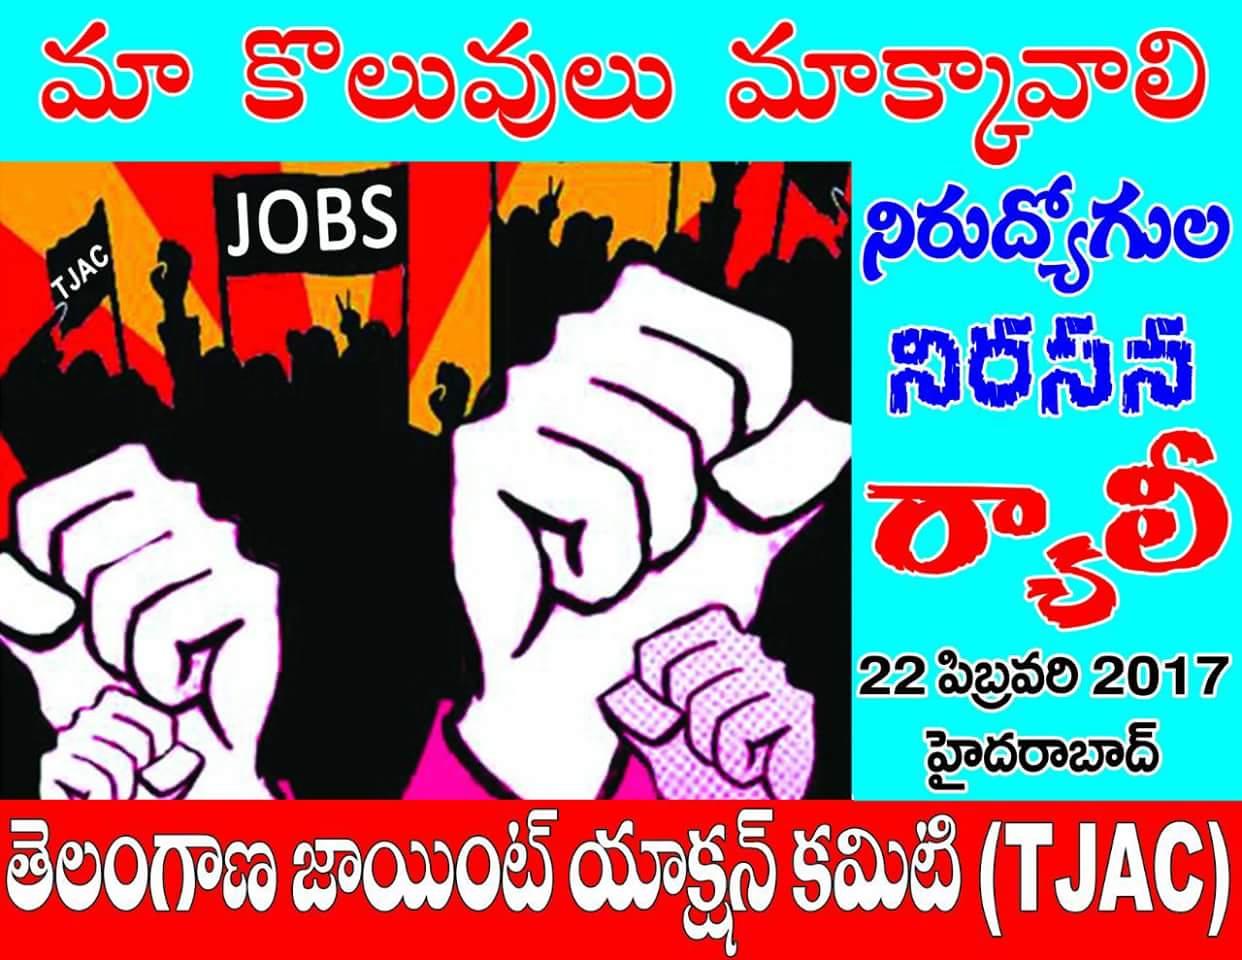 where have the Telangana jobs gone